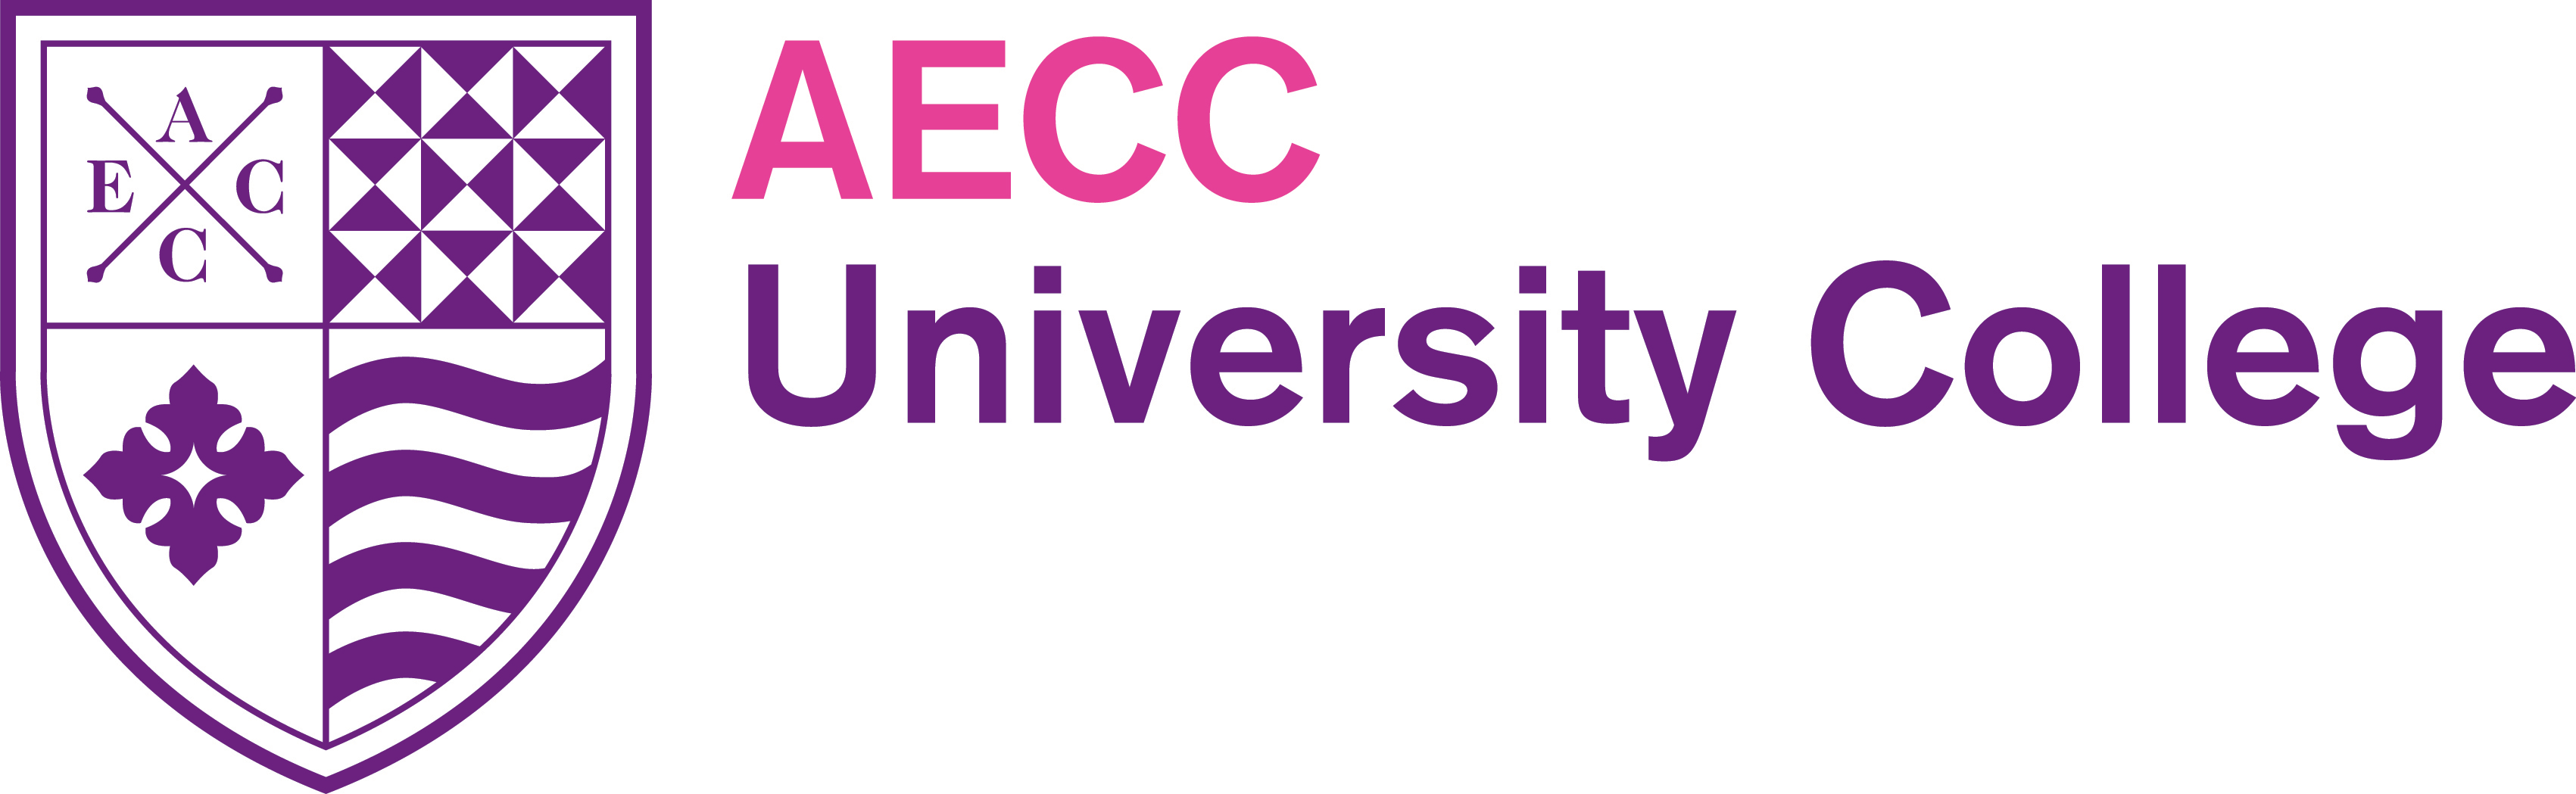 AECC University College | United Kingdom